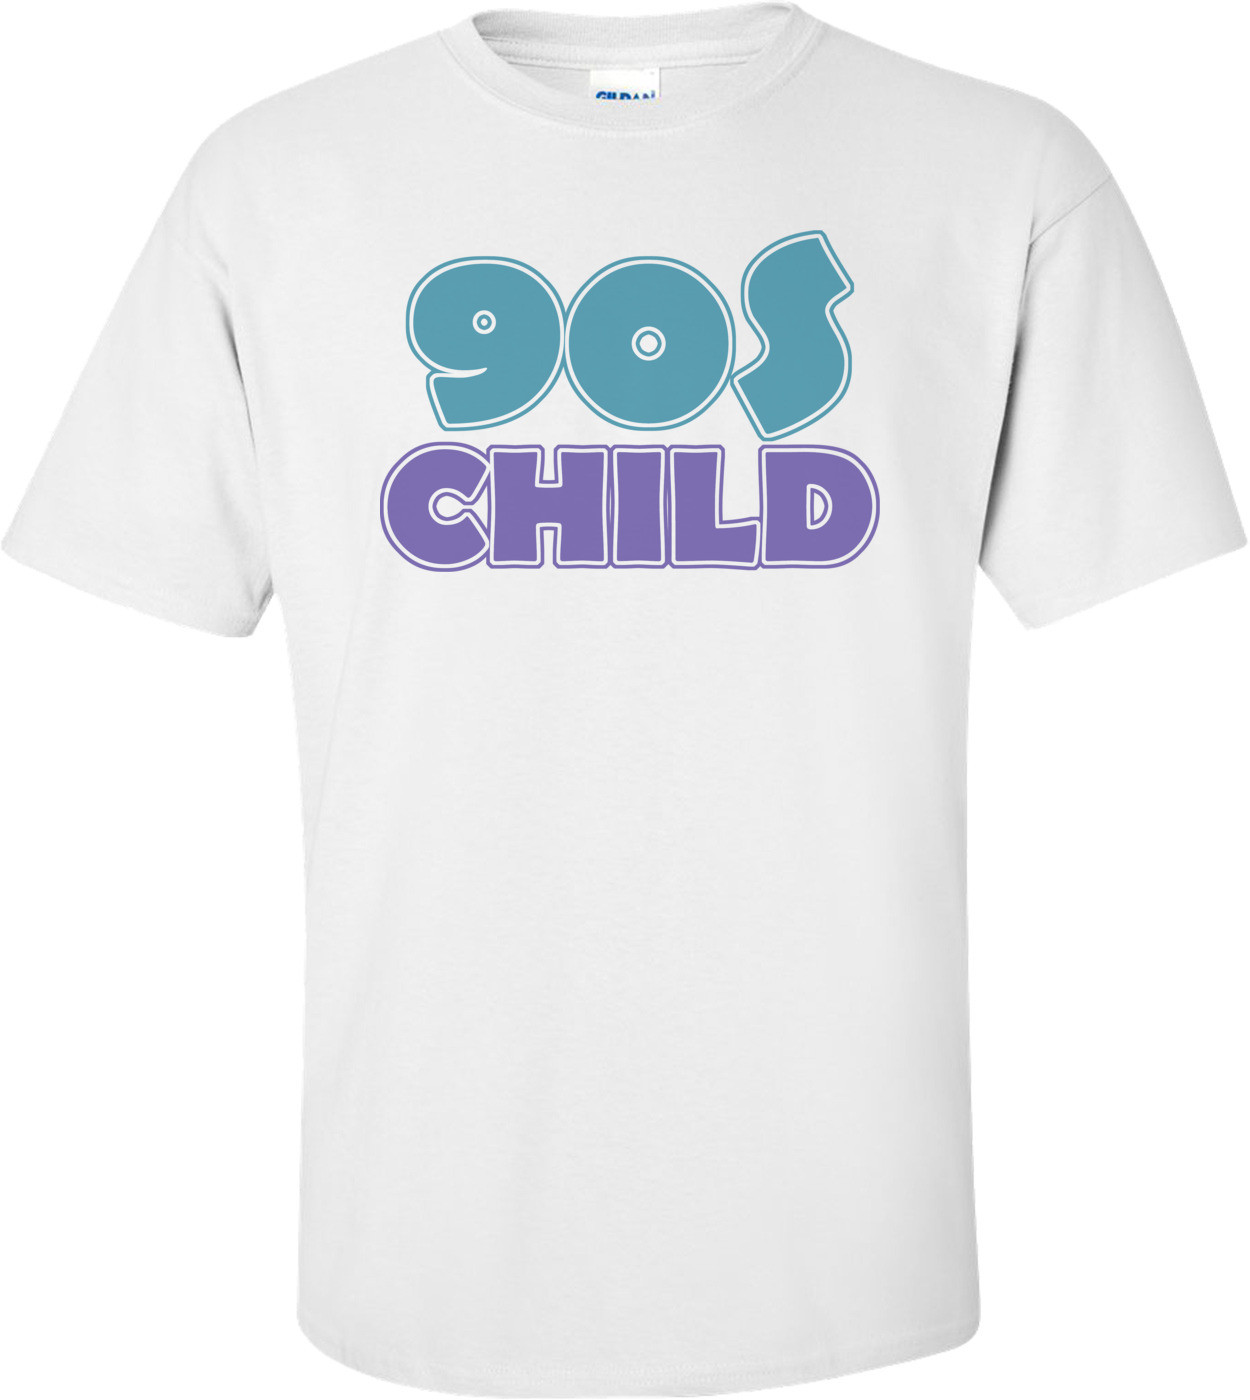 90's Child